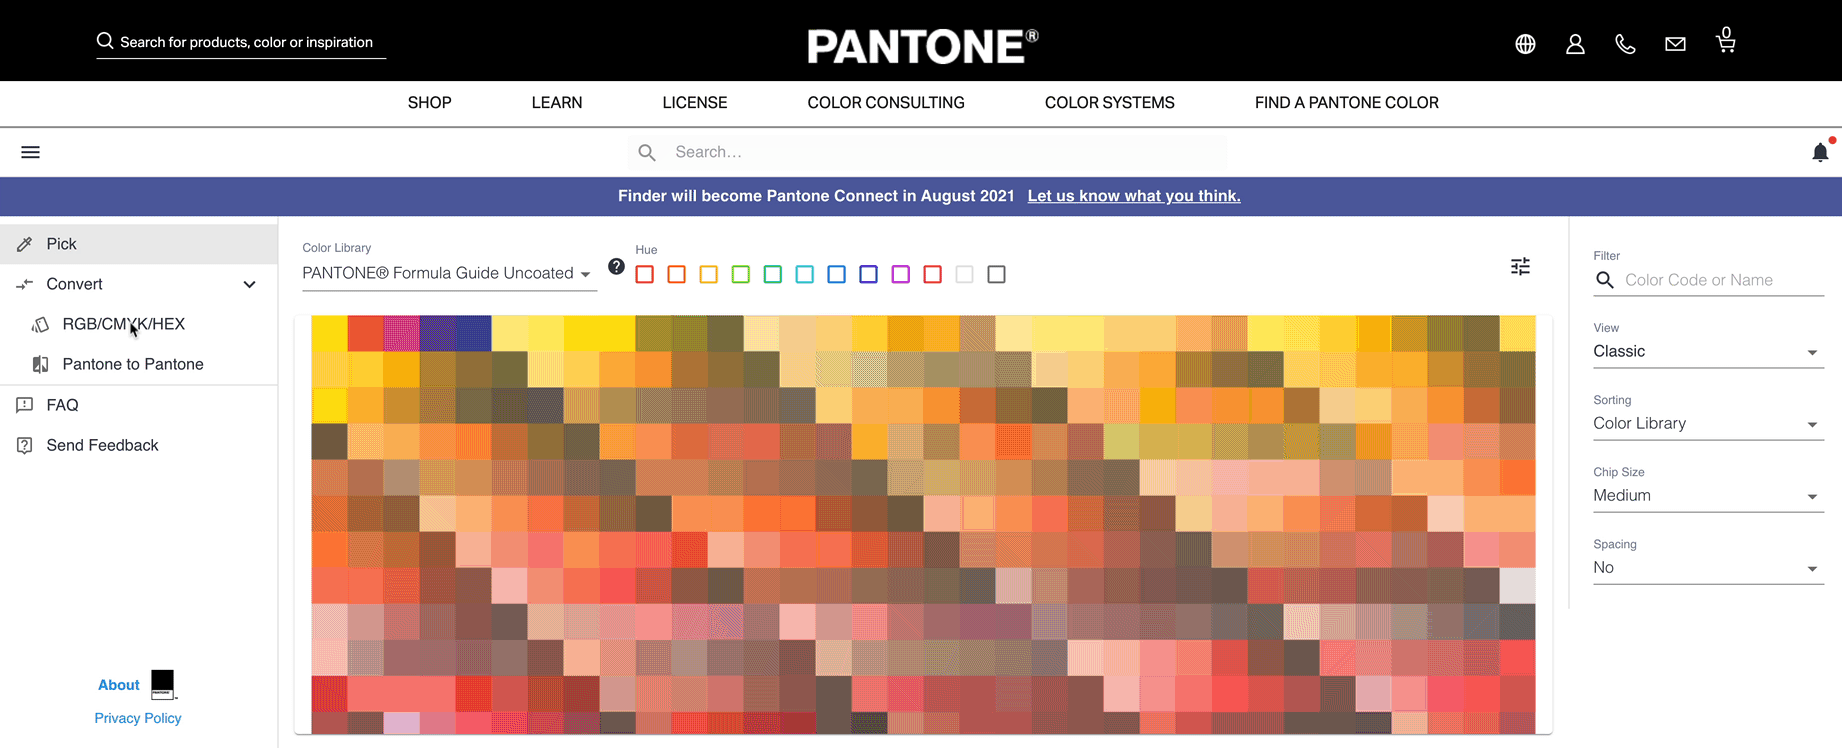 Pantone color finder tool